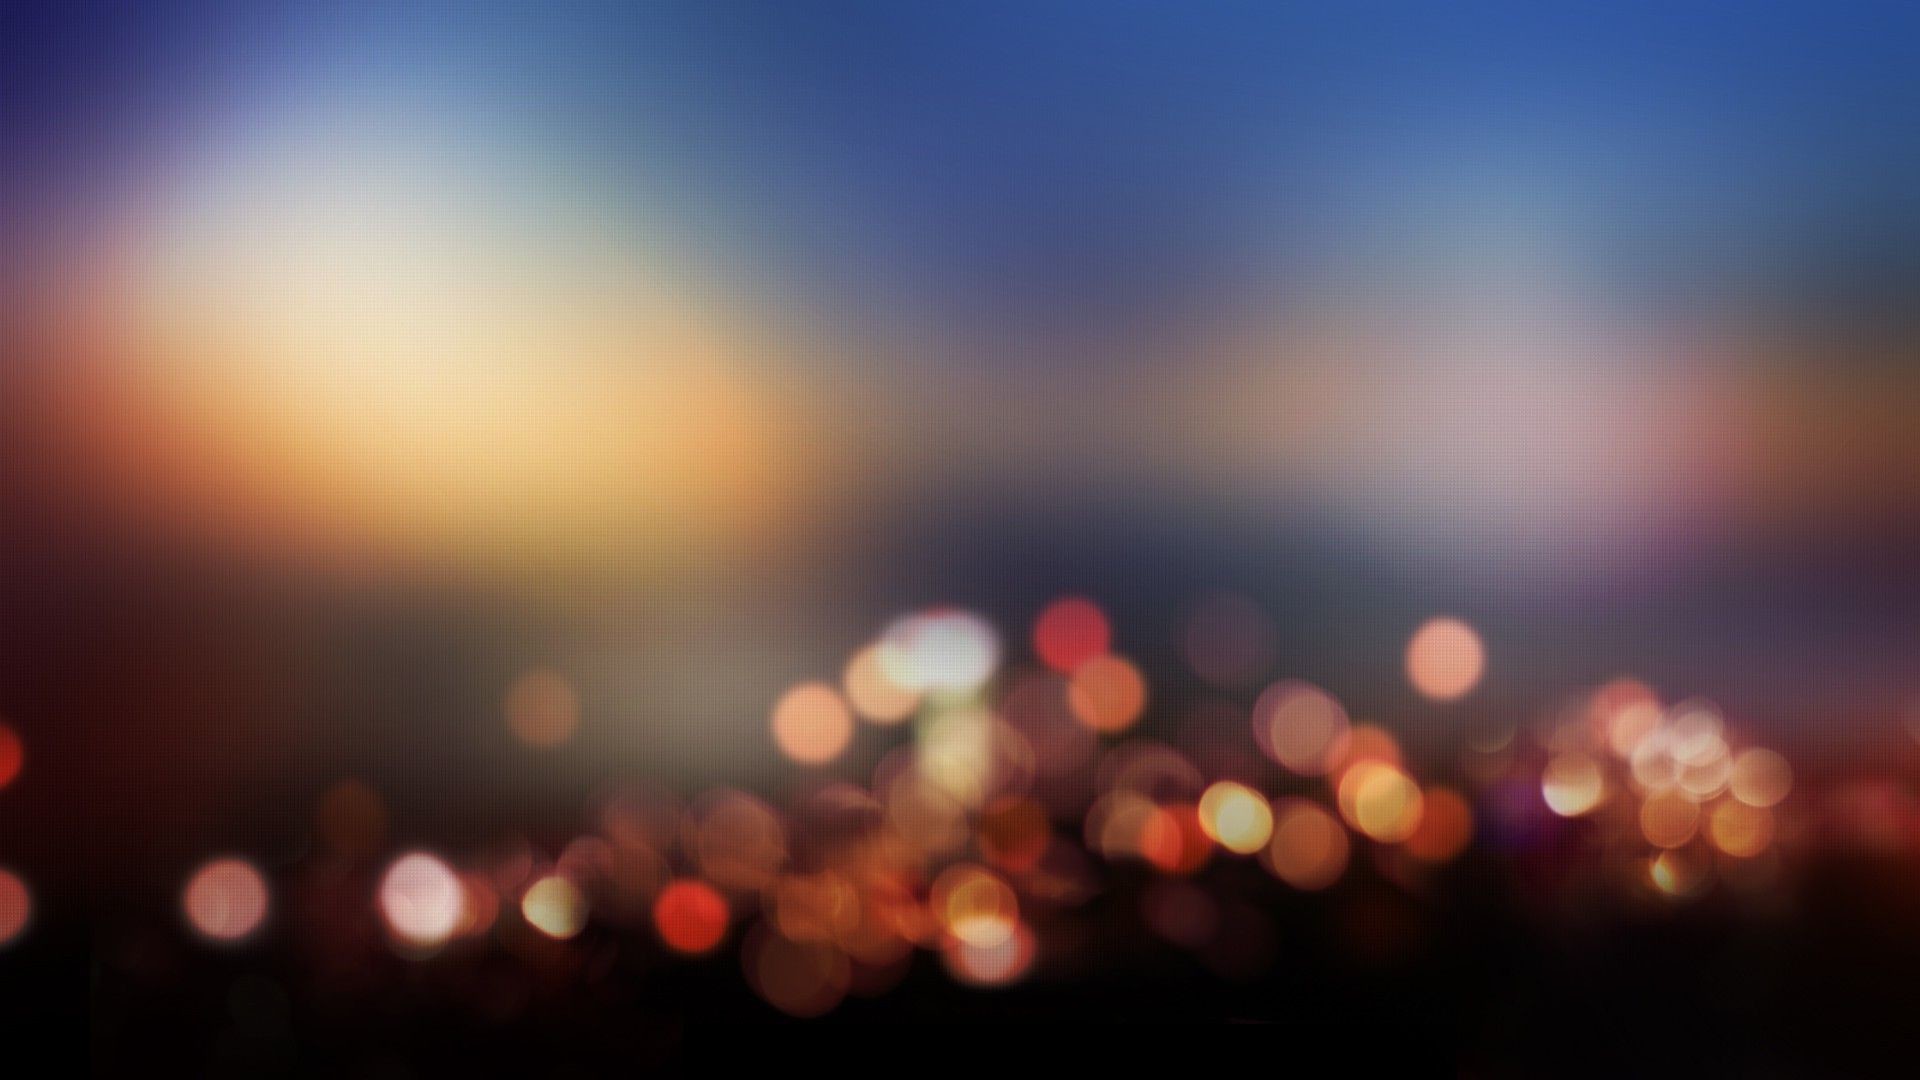 1920x1080 Blurred-City-Lights-Widescreen-Background-Wallpaper